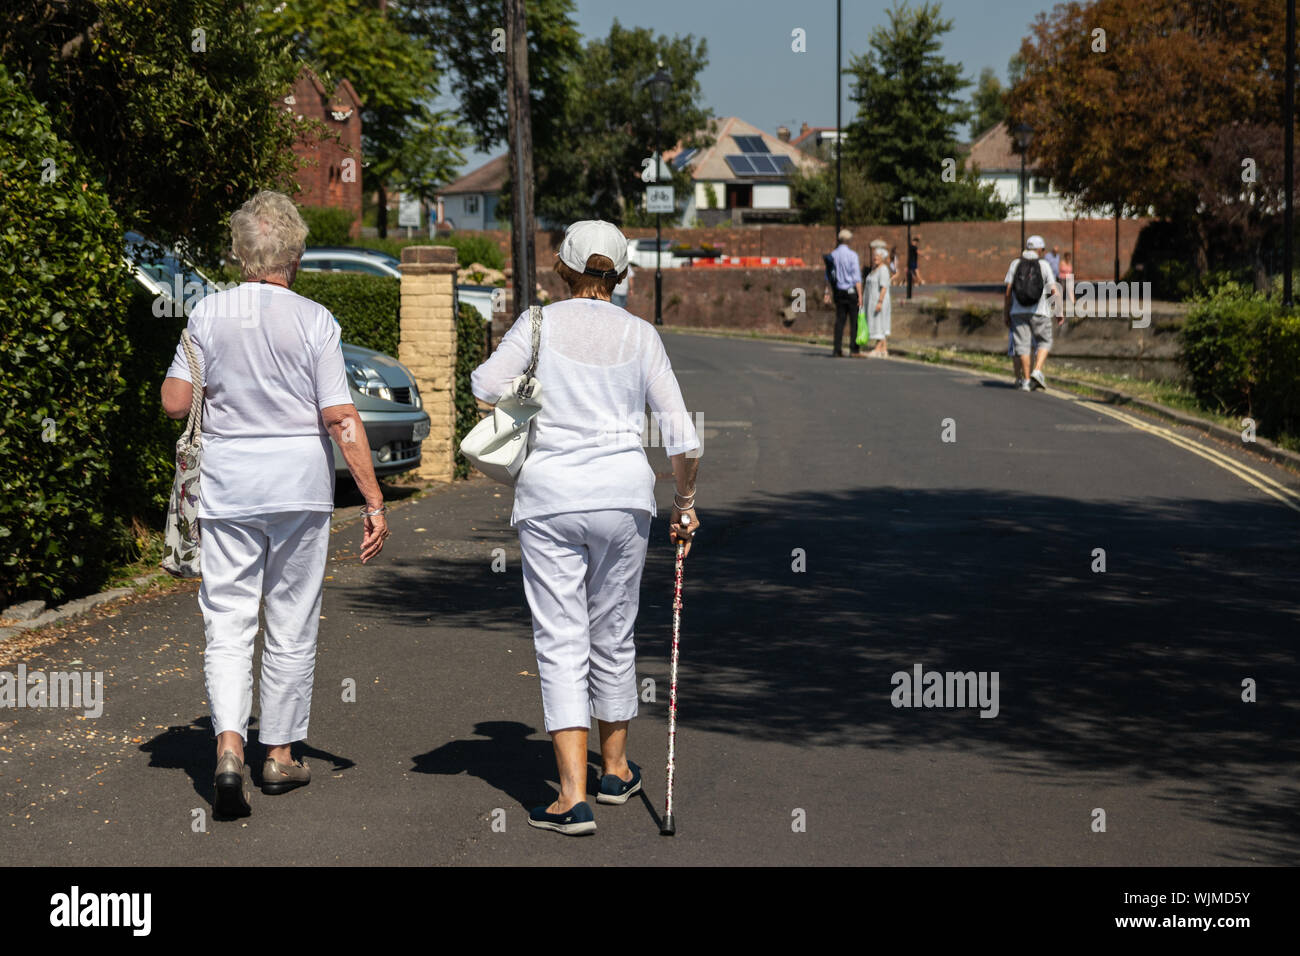 Two elderly women walking down a street, one of the women is using a walking stick or walking aid Stock Photo